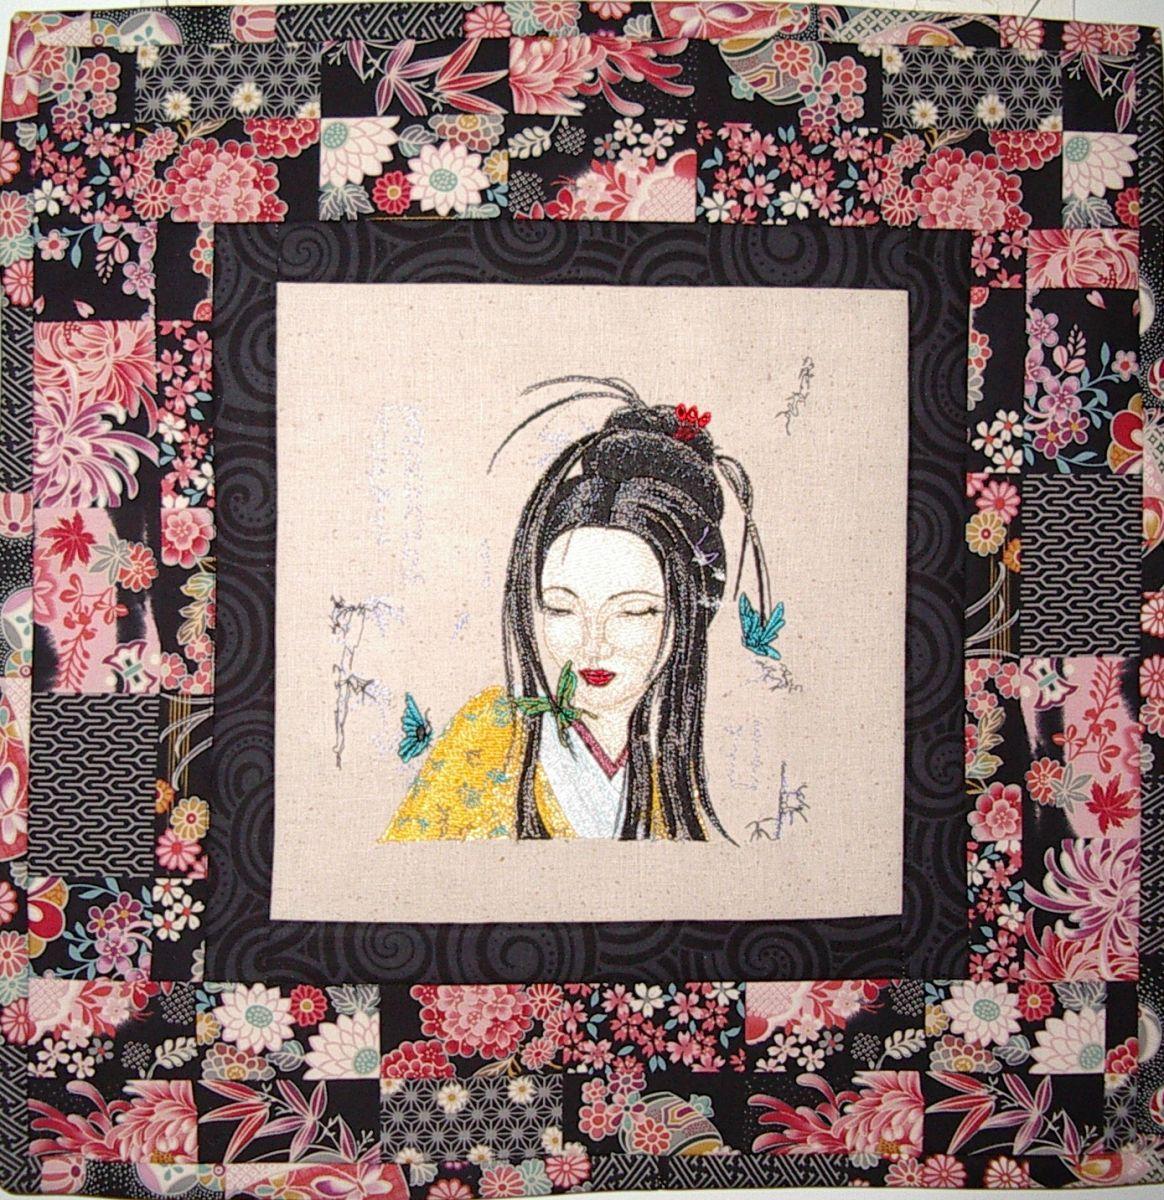 Quilt wih Geisha embroidery design